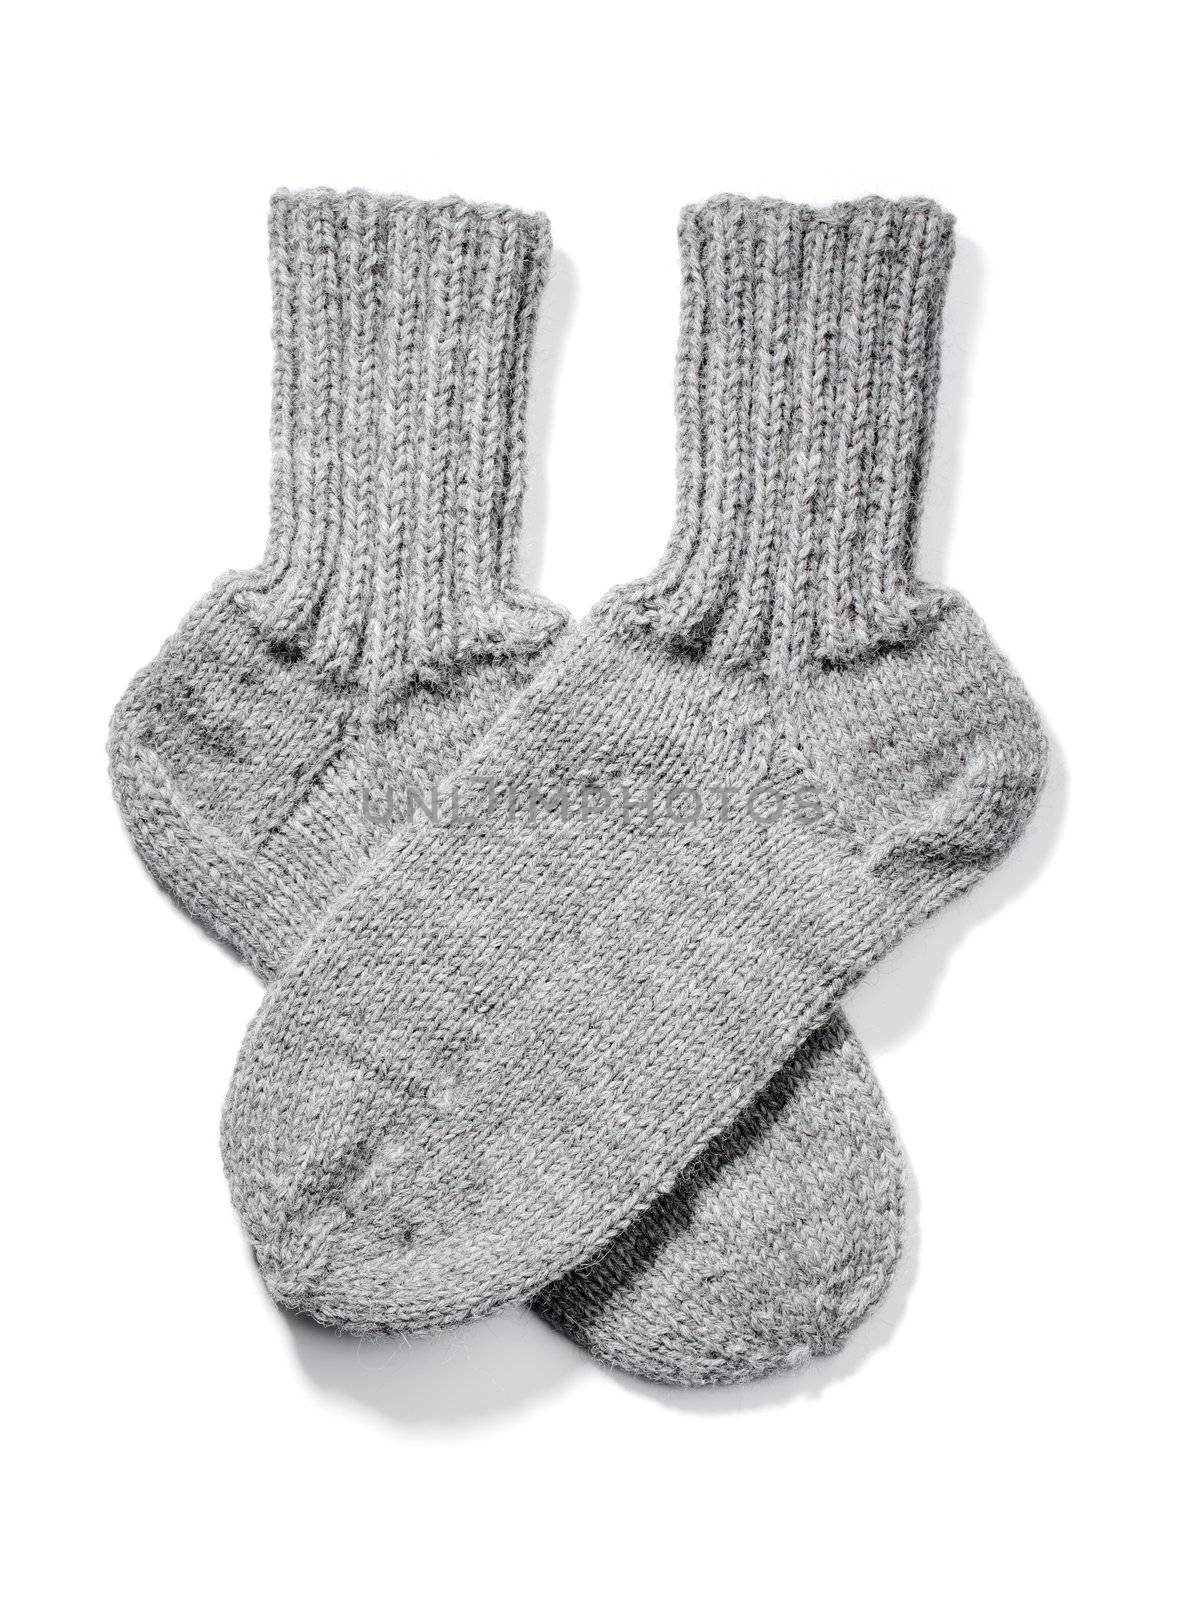 Warm Socks by Stocksnapper